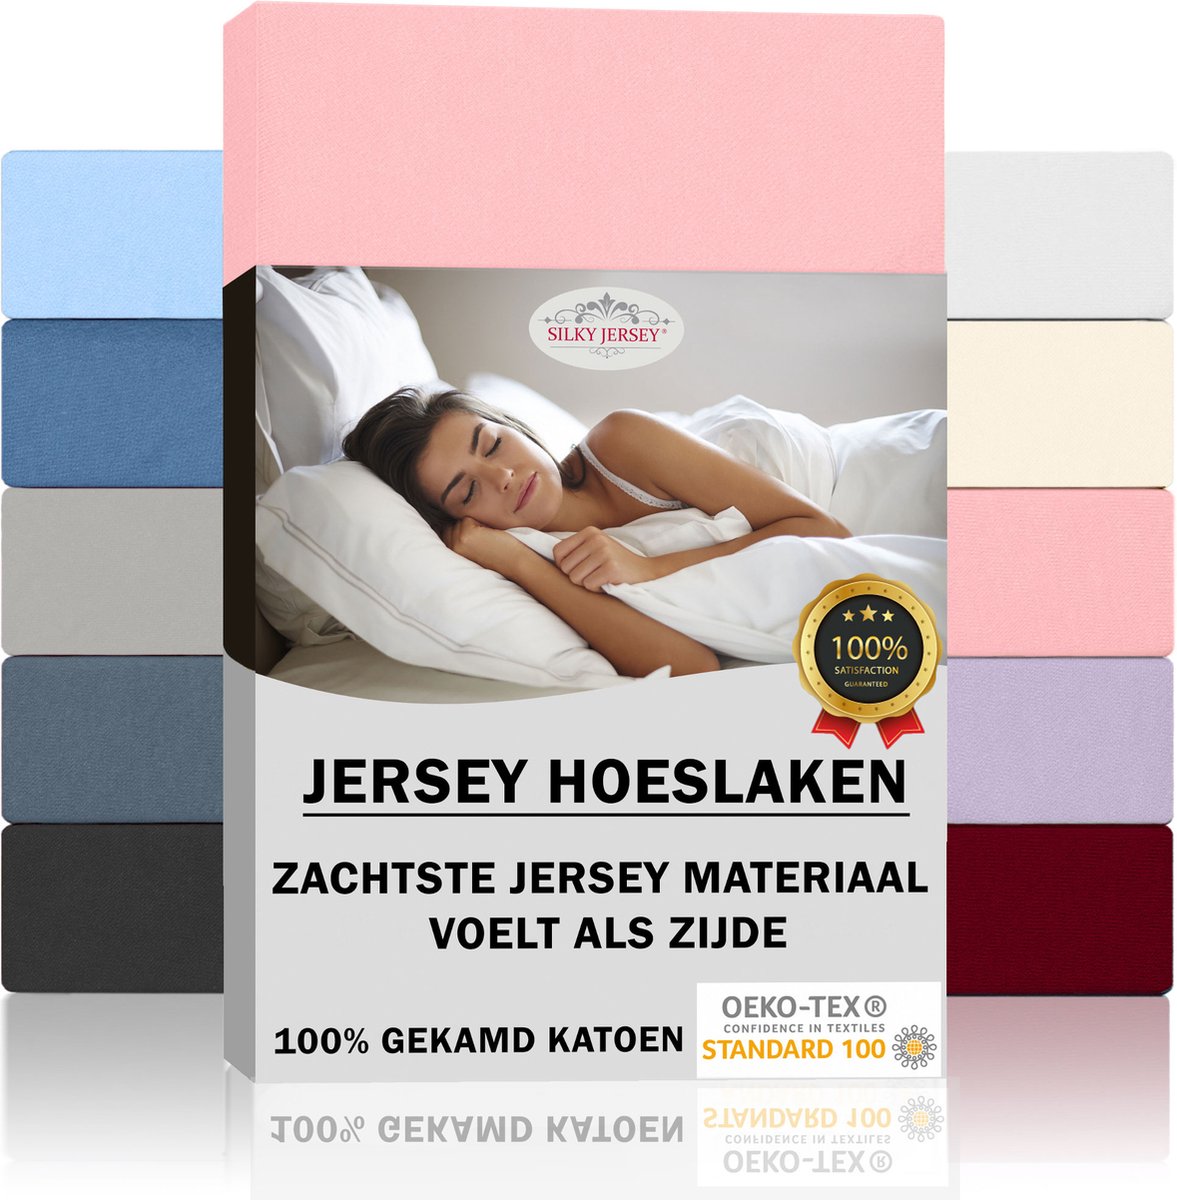 Silky Jersey Zijdezachte Jersey Hoeslaken Strijkvrij 100% Gekamd Katoen - 140x200+30 cm Roze